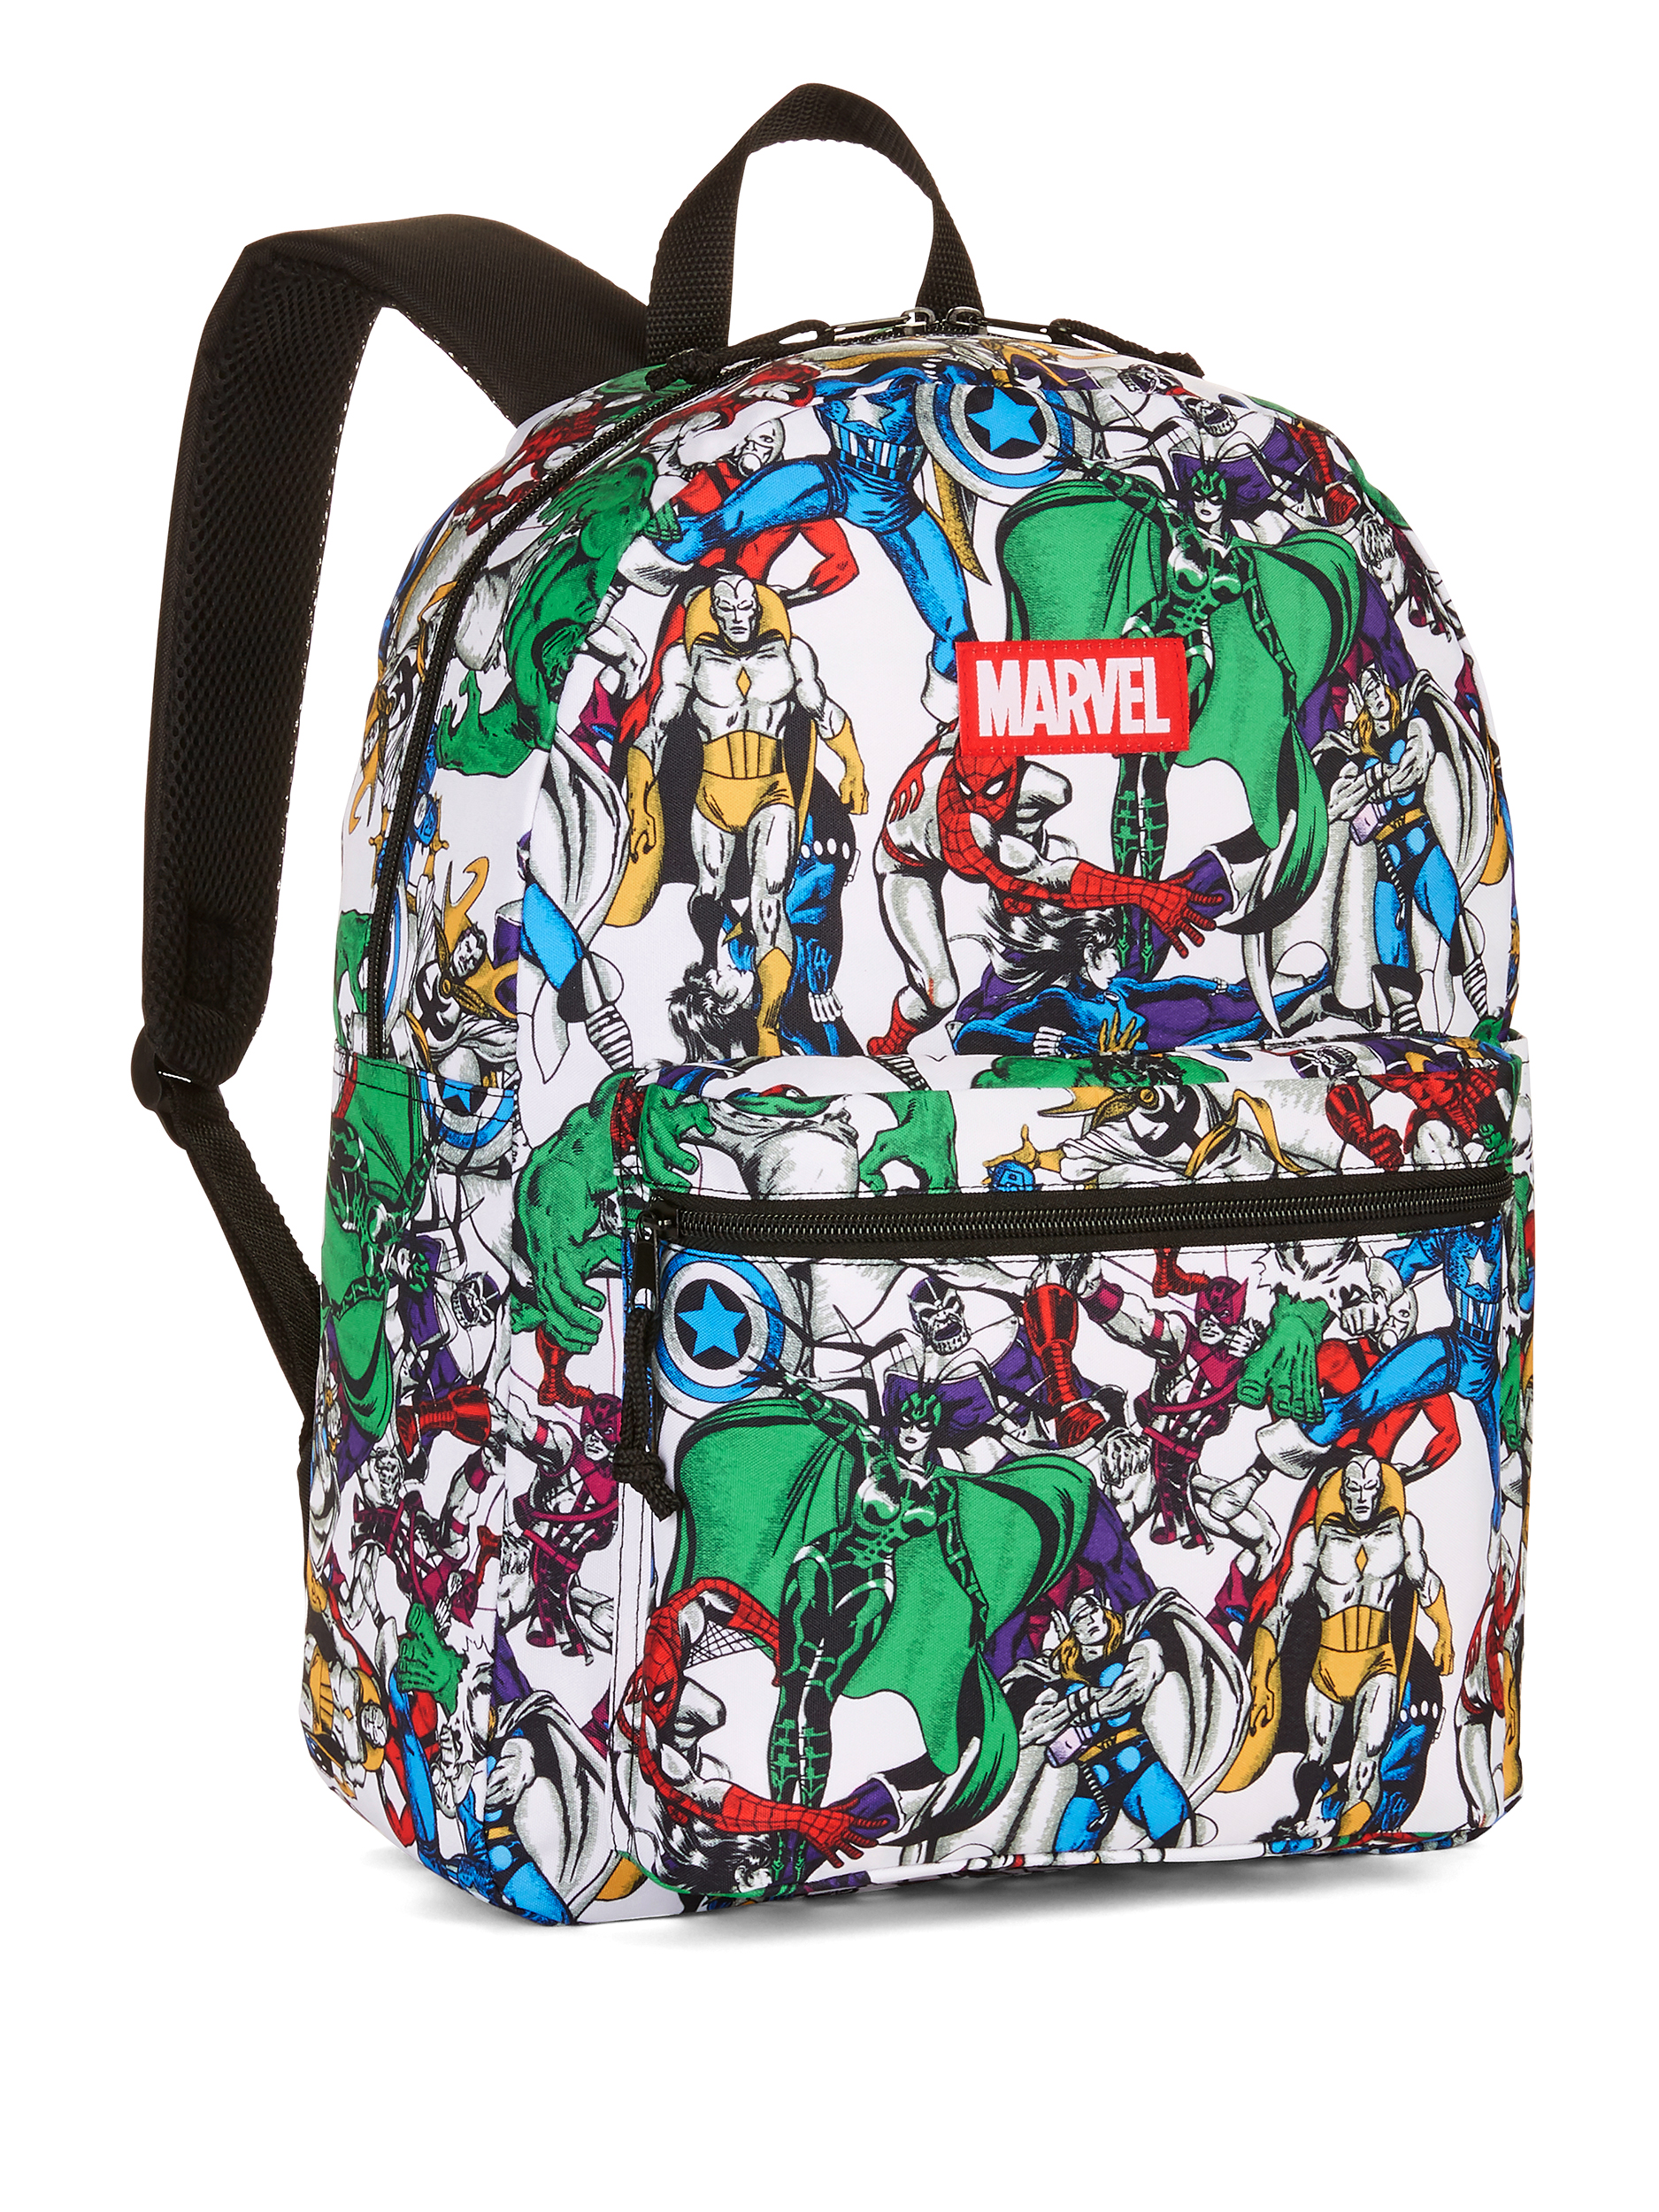 Marvel Comics Avengers Comic Print 16" Backpack - image 3 of 4